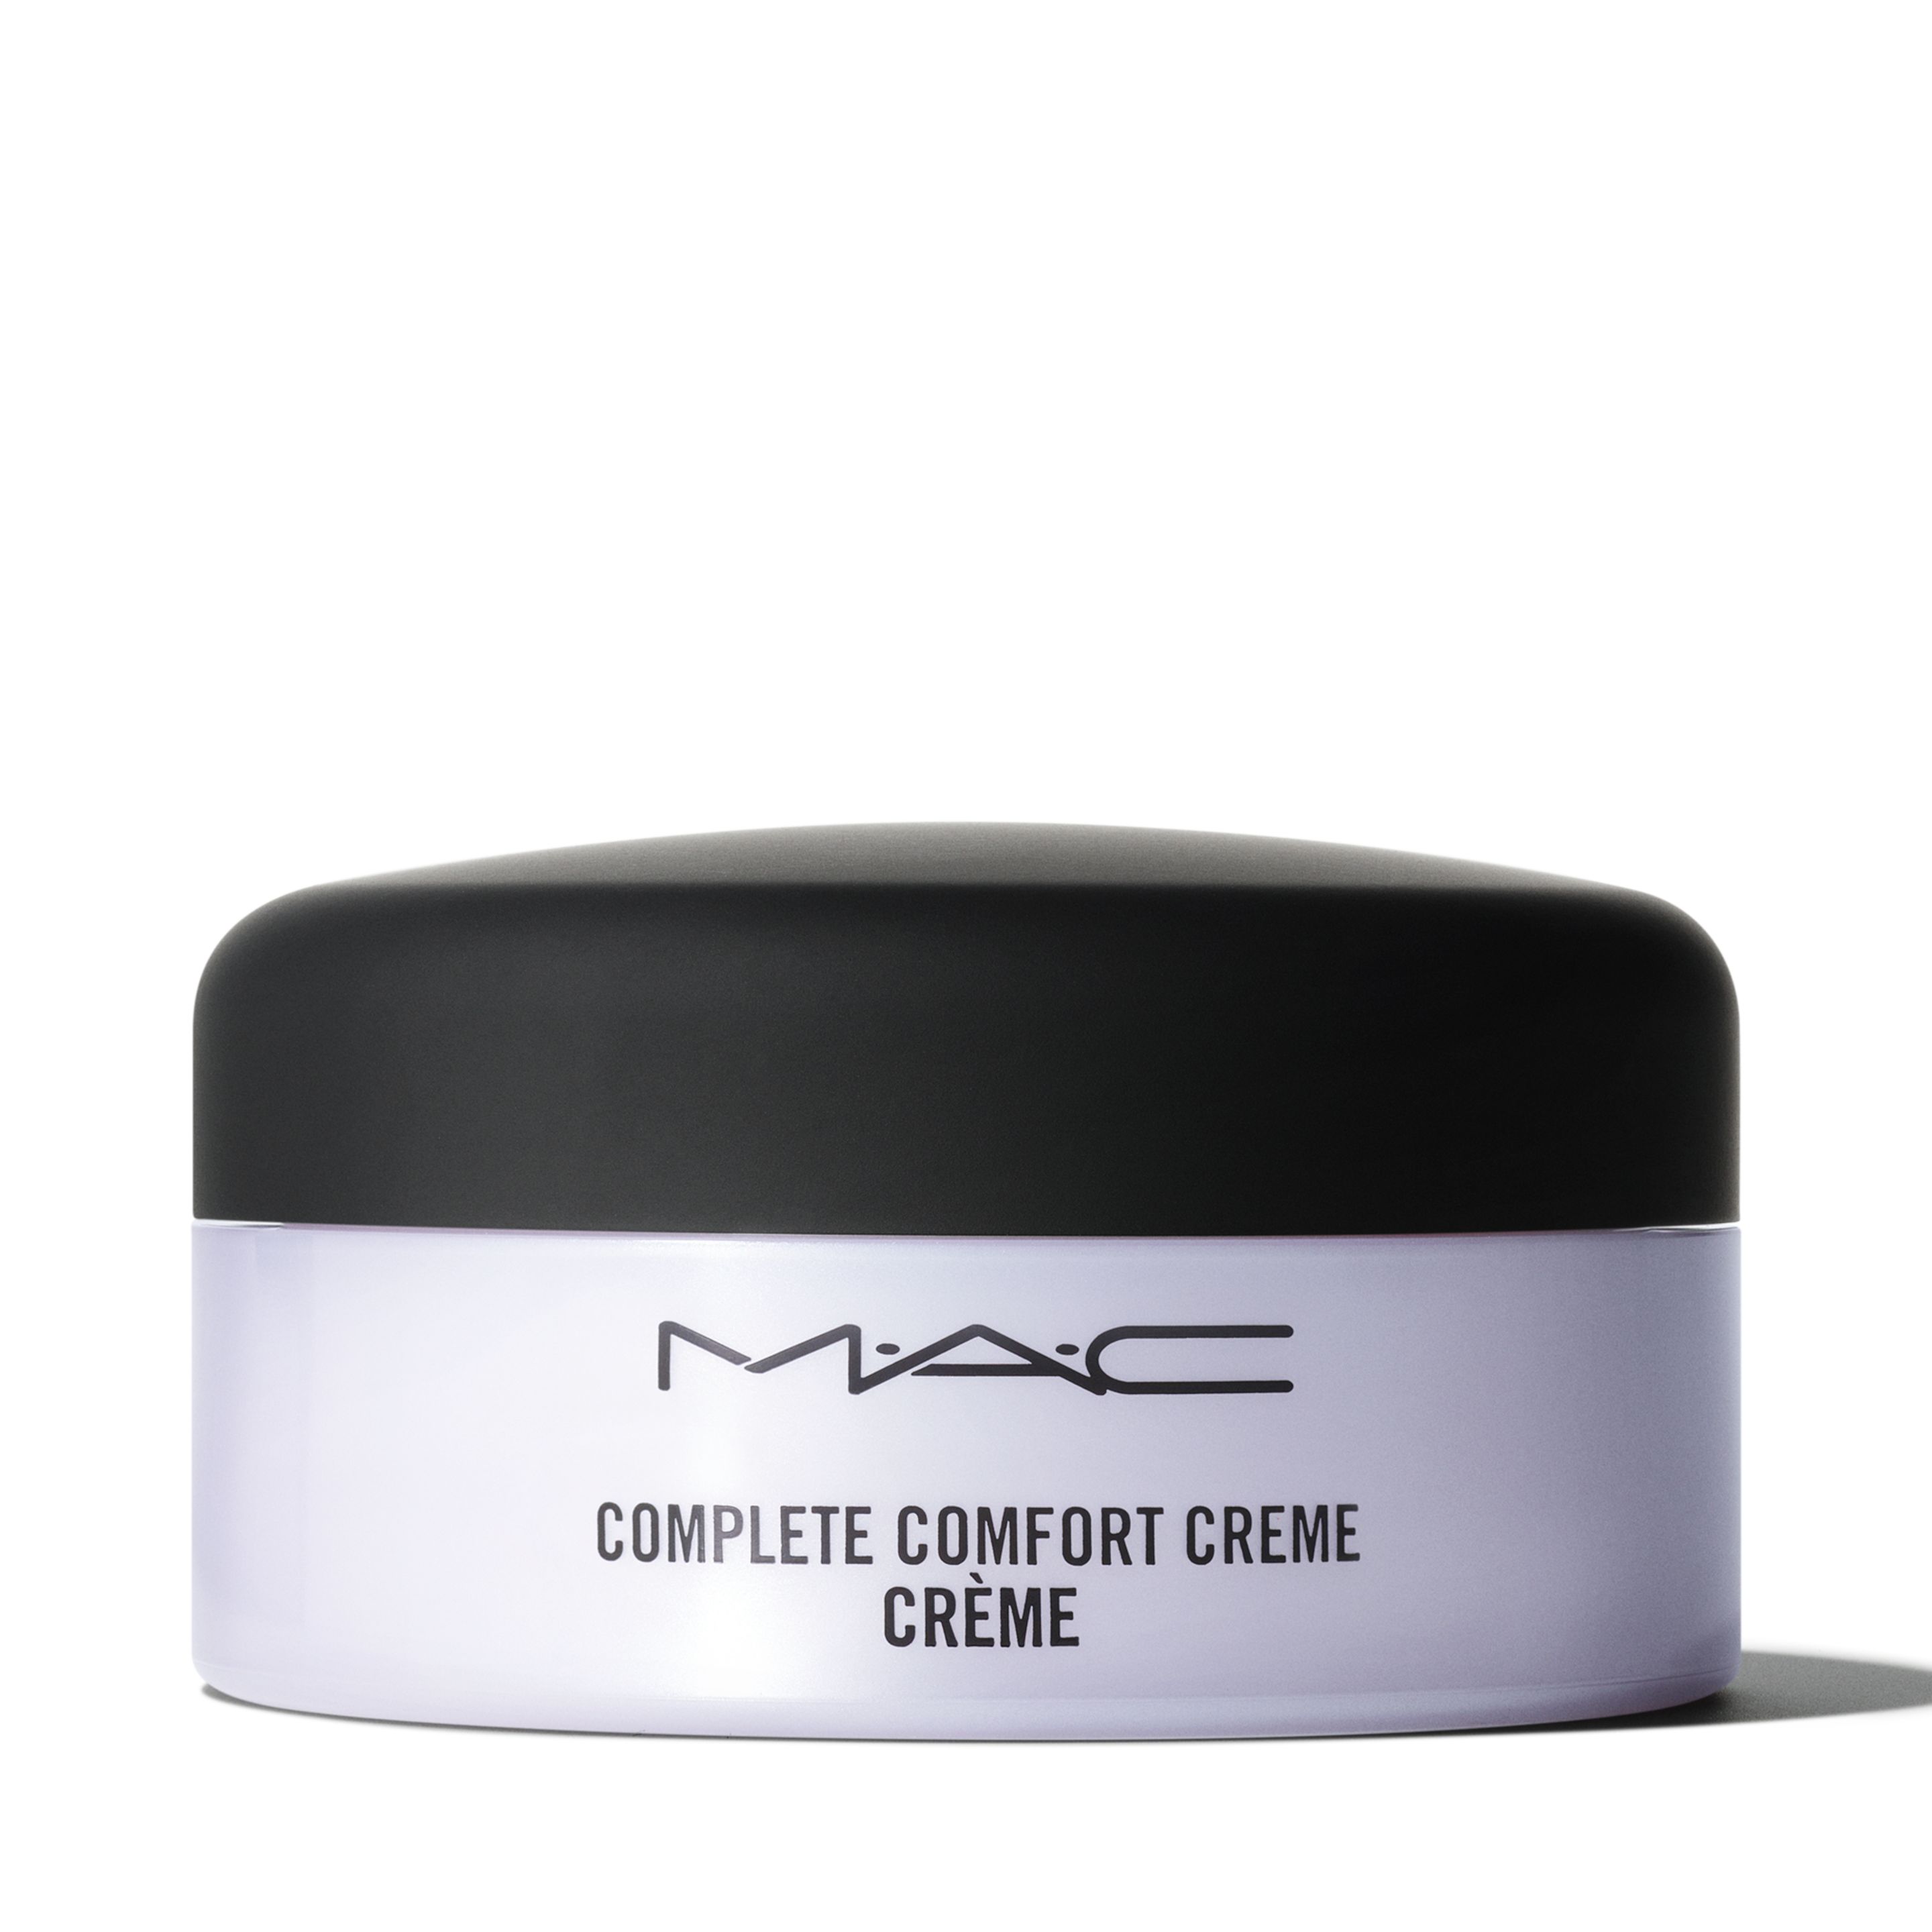 Крем для лица MAC Cosmetics Complete Comfort Creme глубокоувлажняющий, 50 мл zaha hadid complete works 1979 today